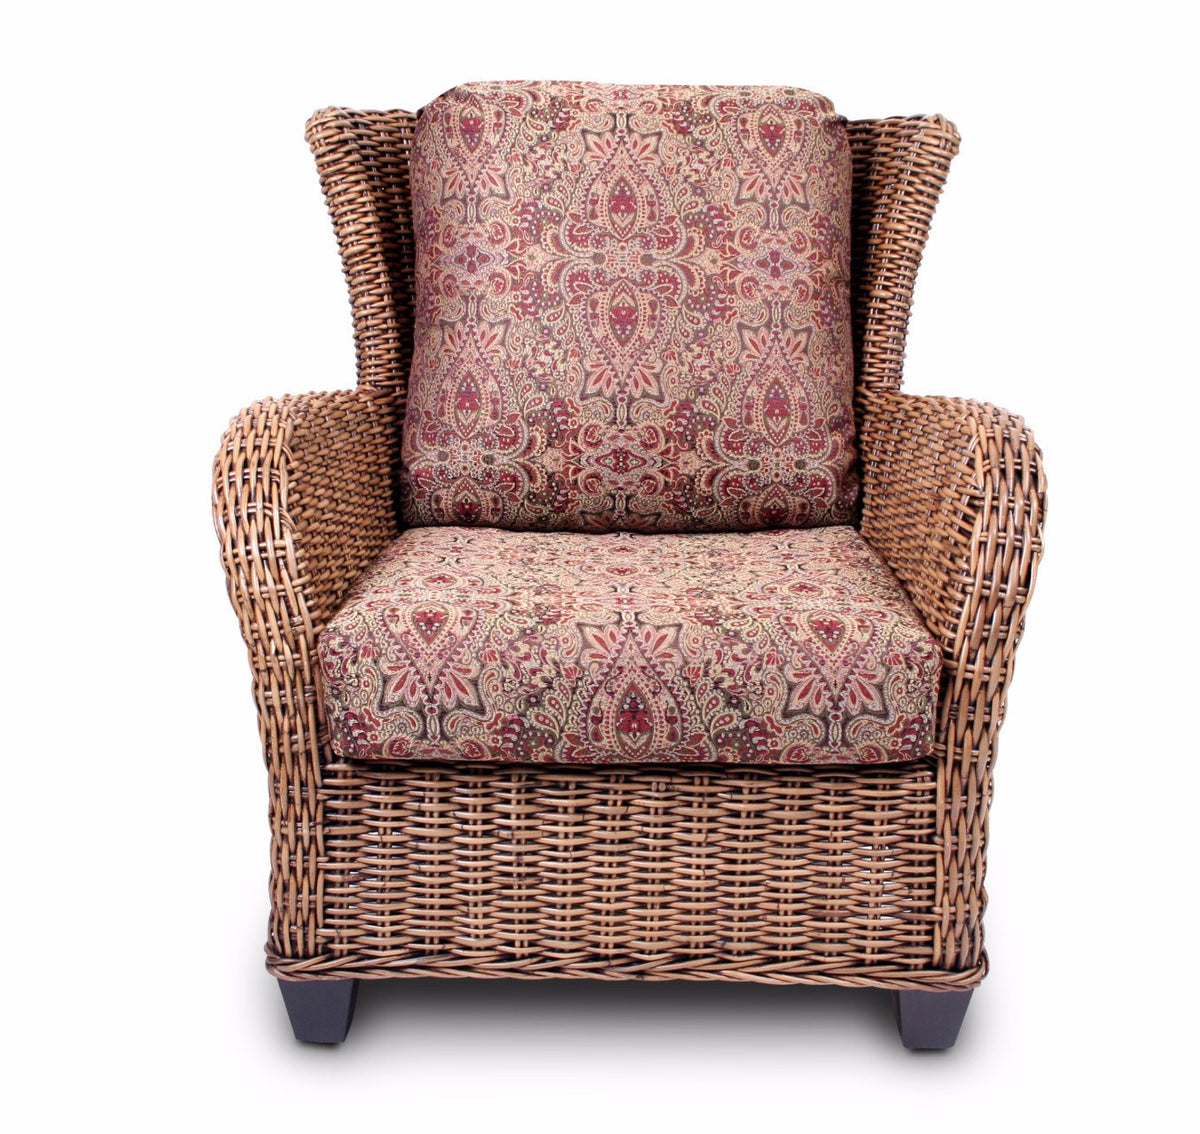 Designer Wicker &amp; Rattan By Tribor Clarissa Porch Arm Chair Chair - Rattan Imports